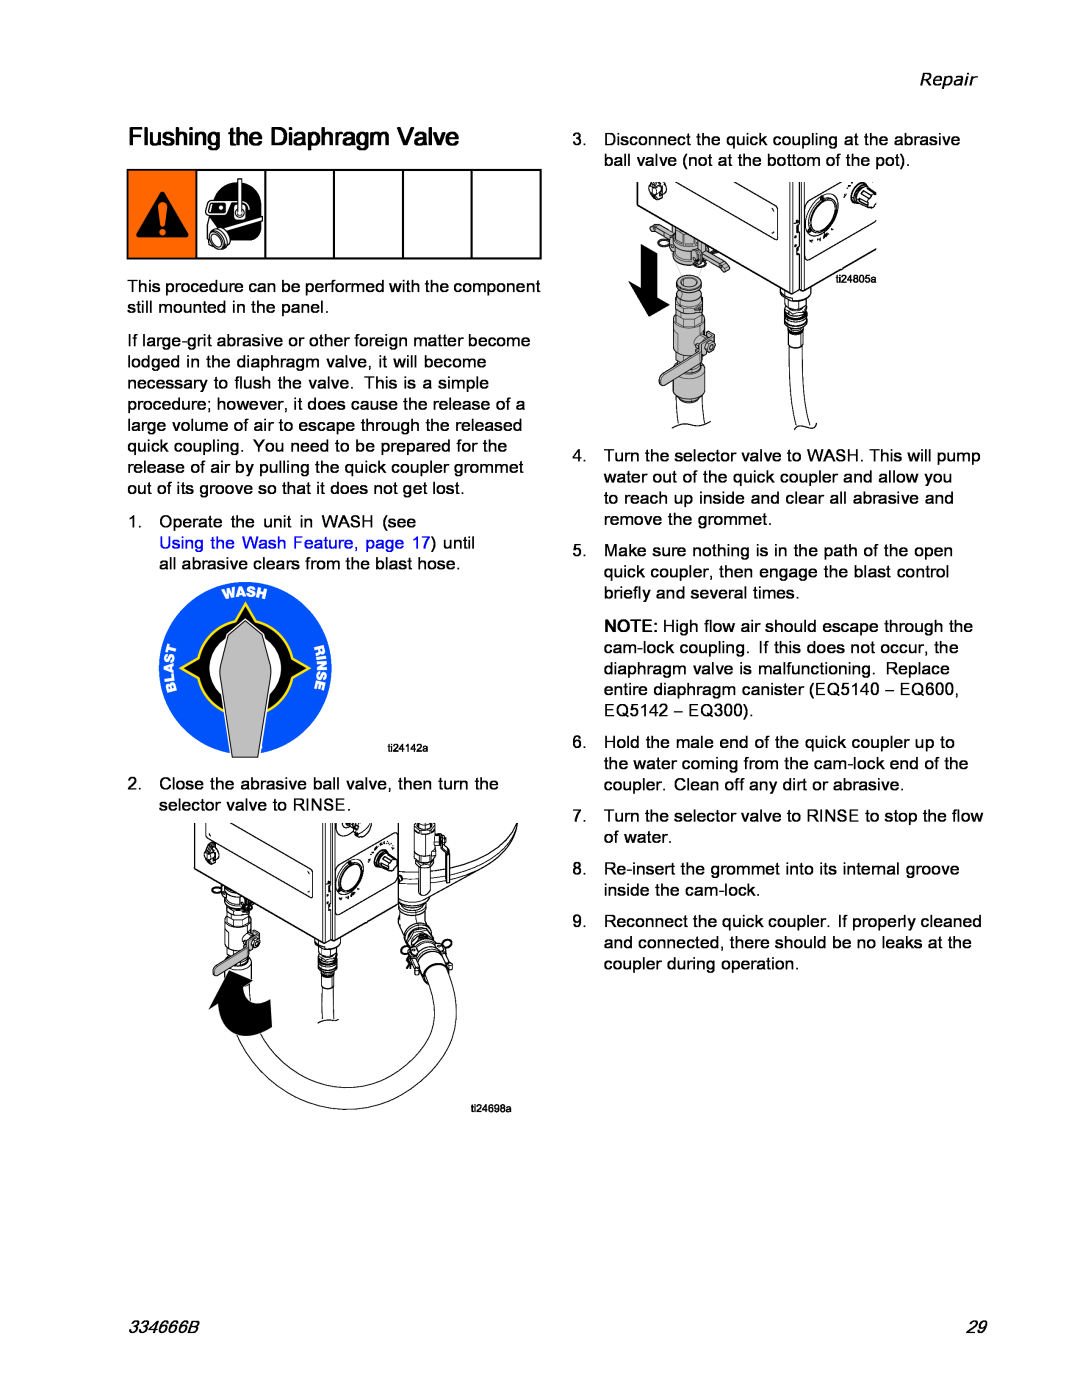 Graco ti25442a manual Flushing the Diaphragm Valve, Repair, 334666B 